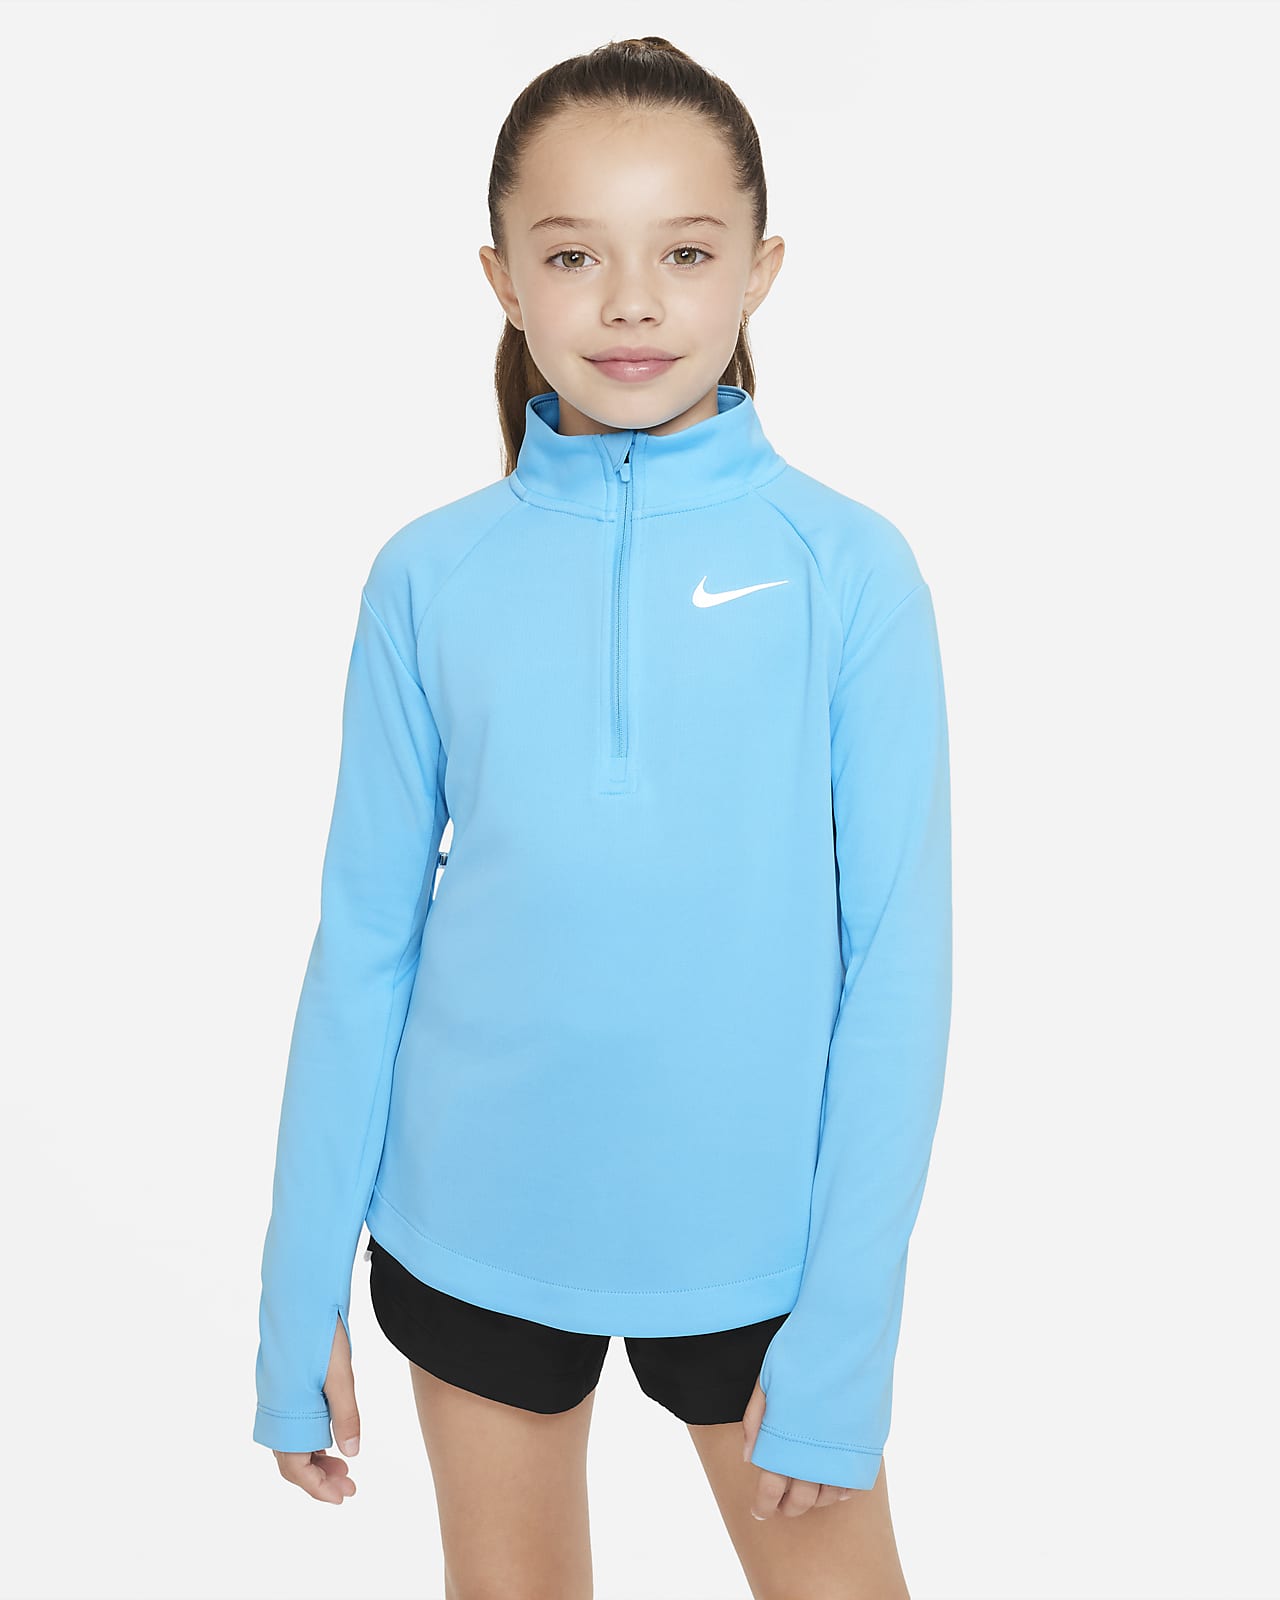 Nike Dri-FIT Big Kids' (Girls') Long-Sleeve Running Top.